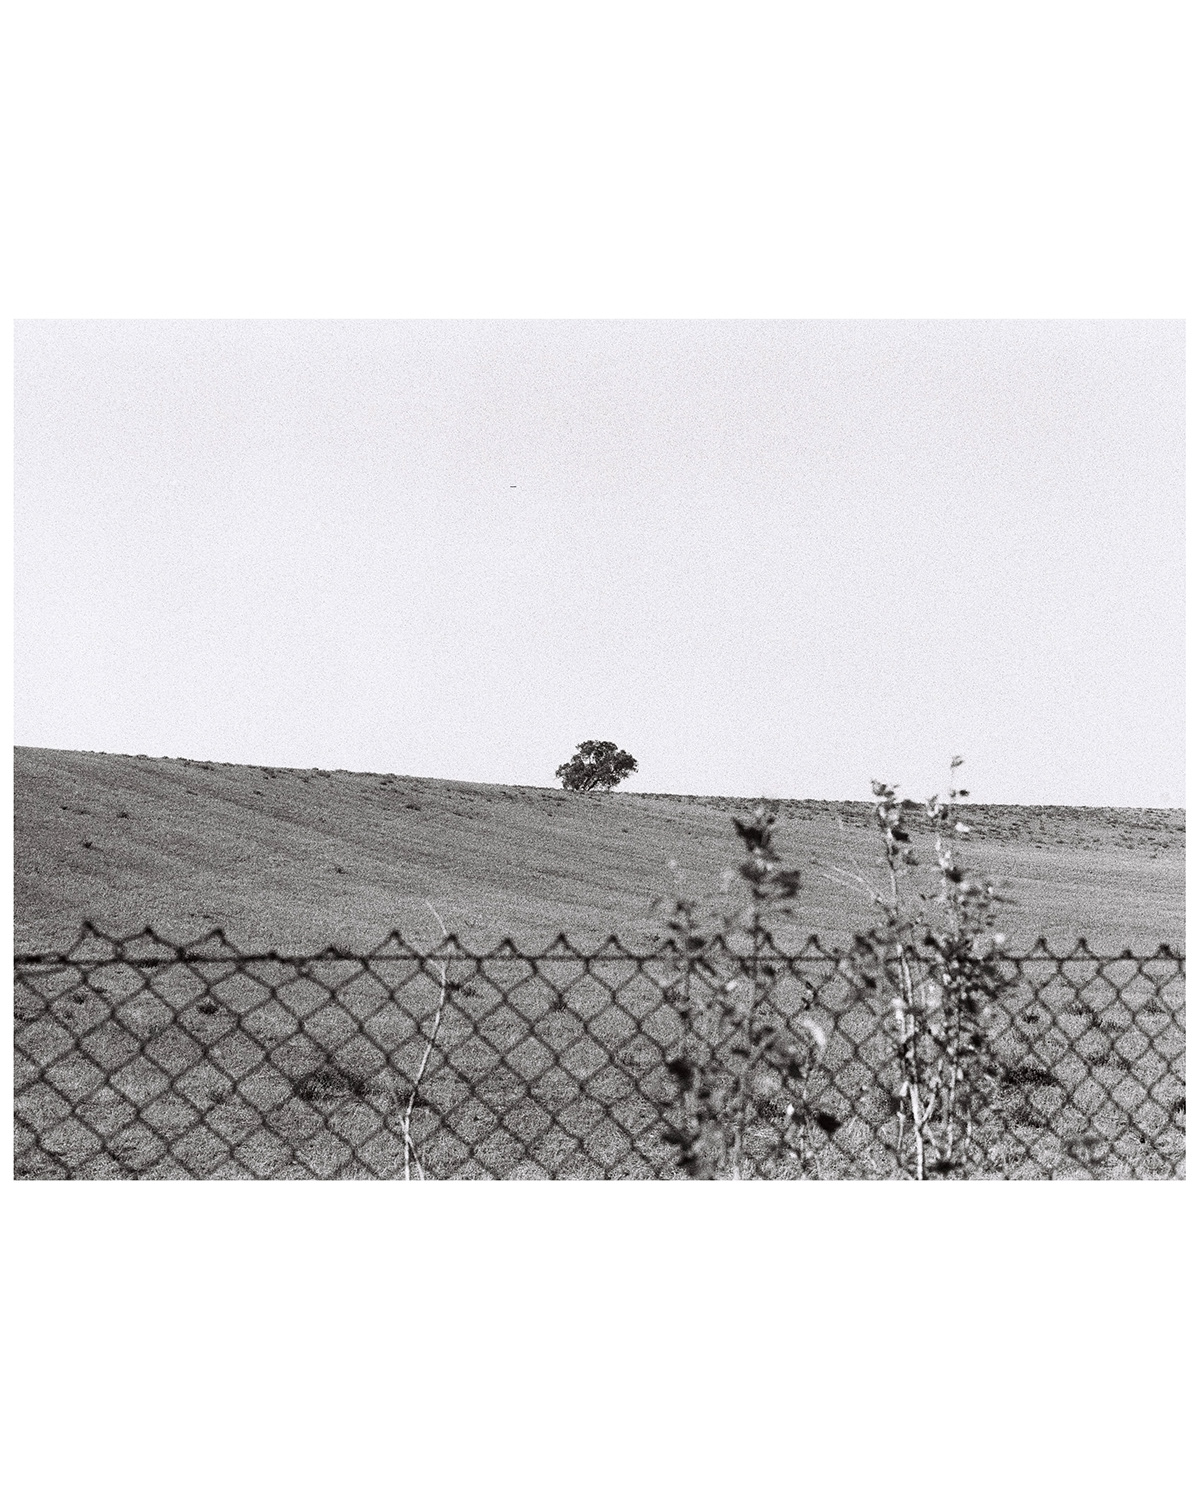 film photography black and white grain 35mm analog kodak 35mm film Ilford FP4